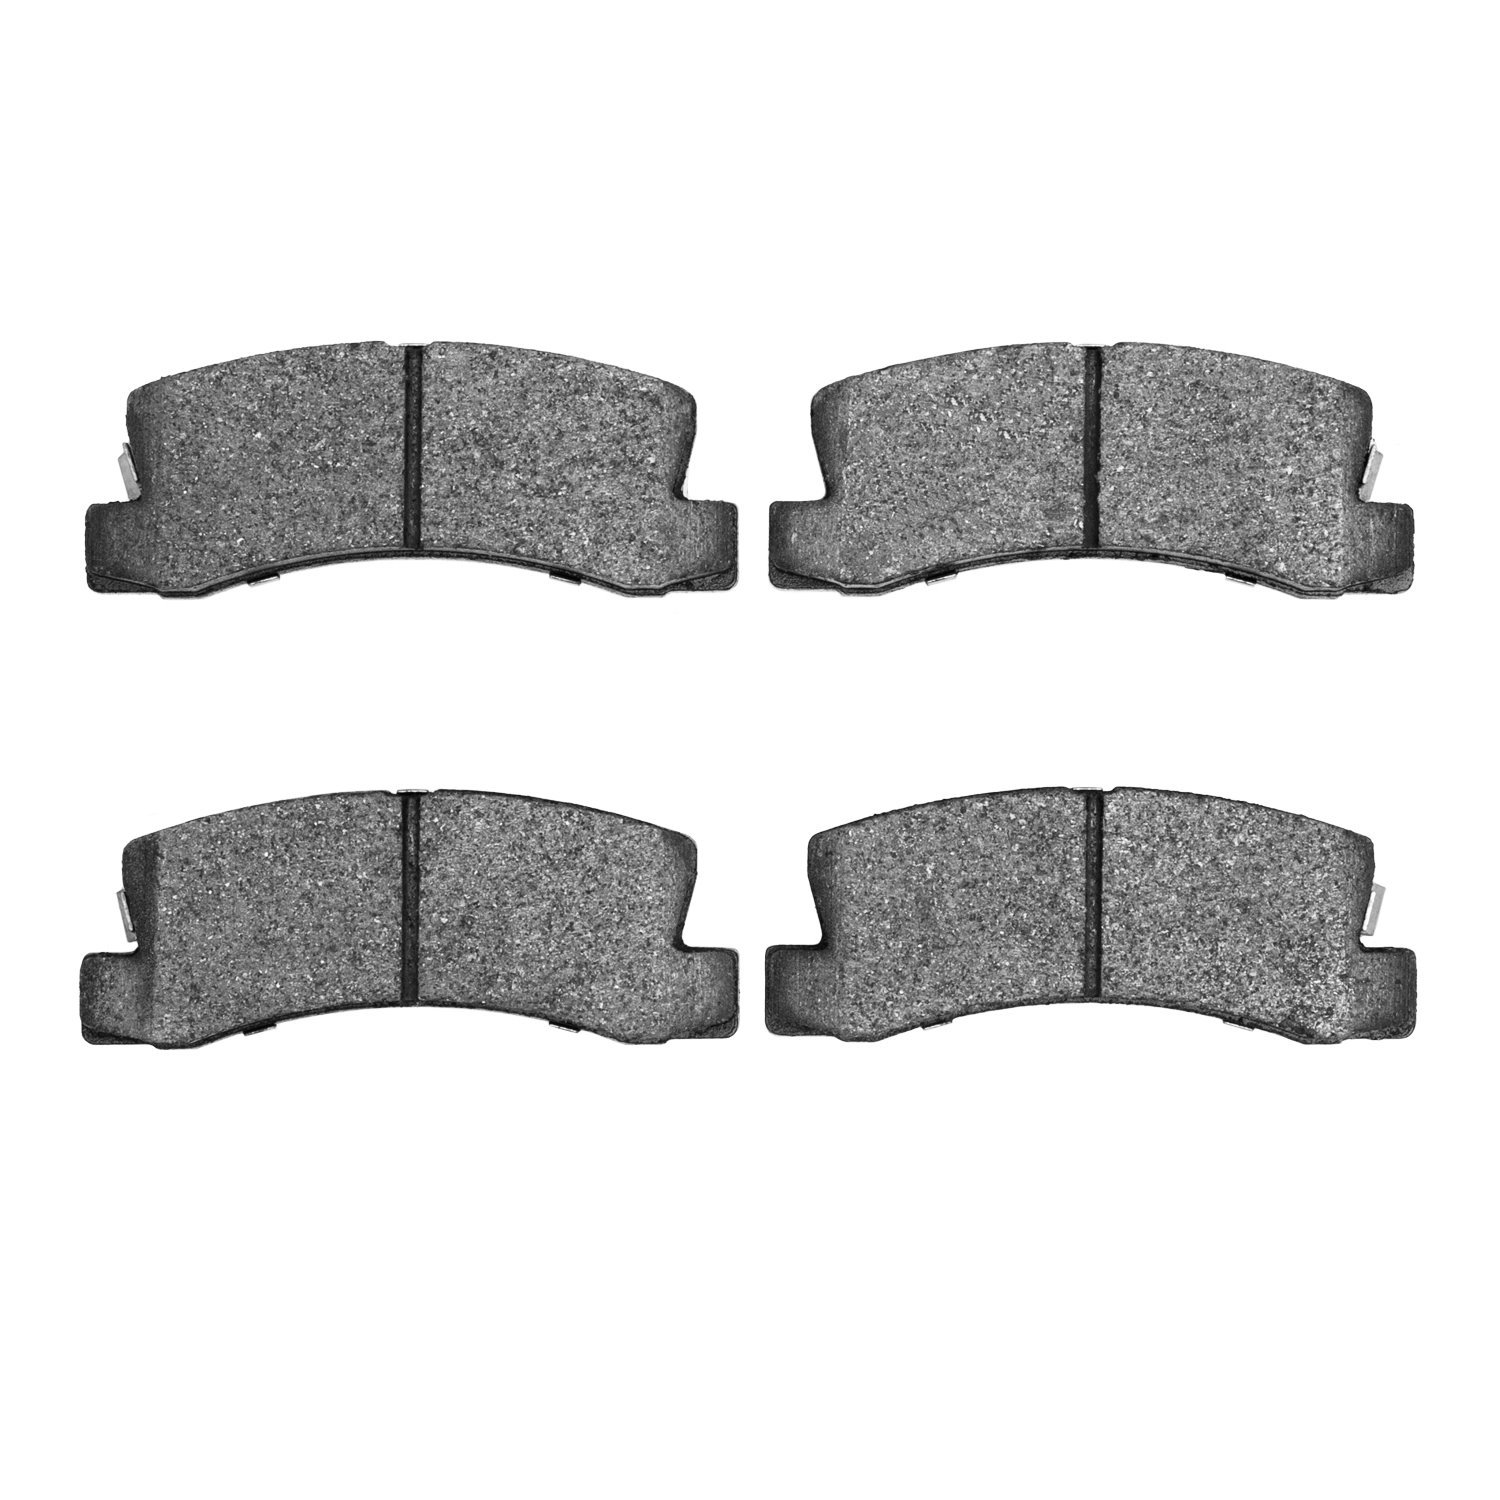 1310-0352-00 3000-Series Ceramic Brake Pads, 1987-1992 Multiple Makes/Models, Position: Rear